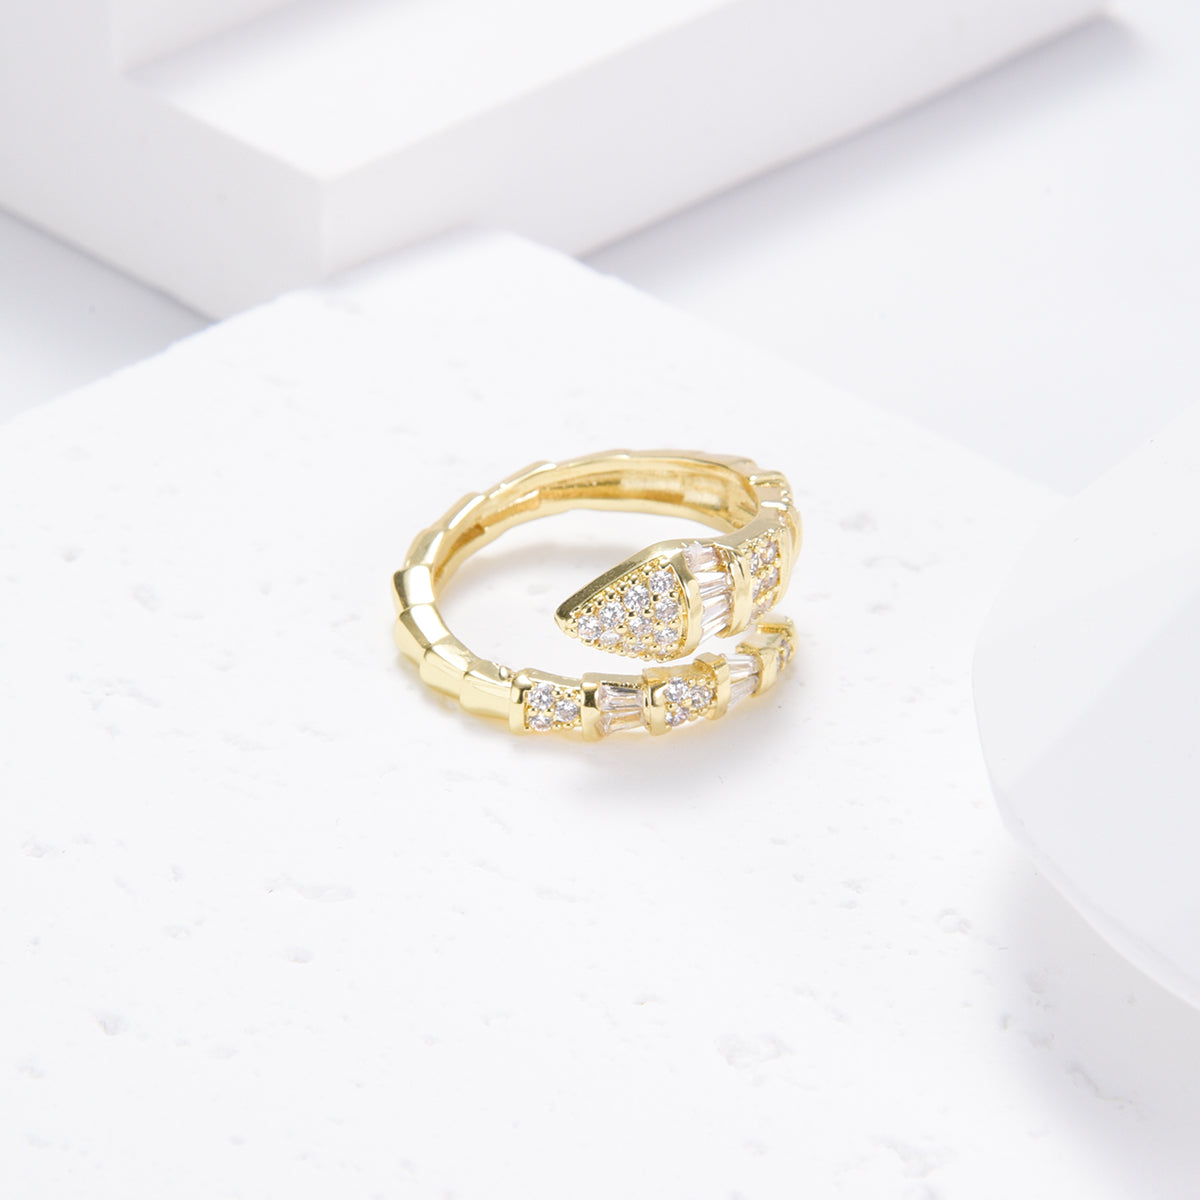 Fancy ring with snake-like pattern